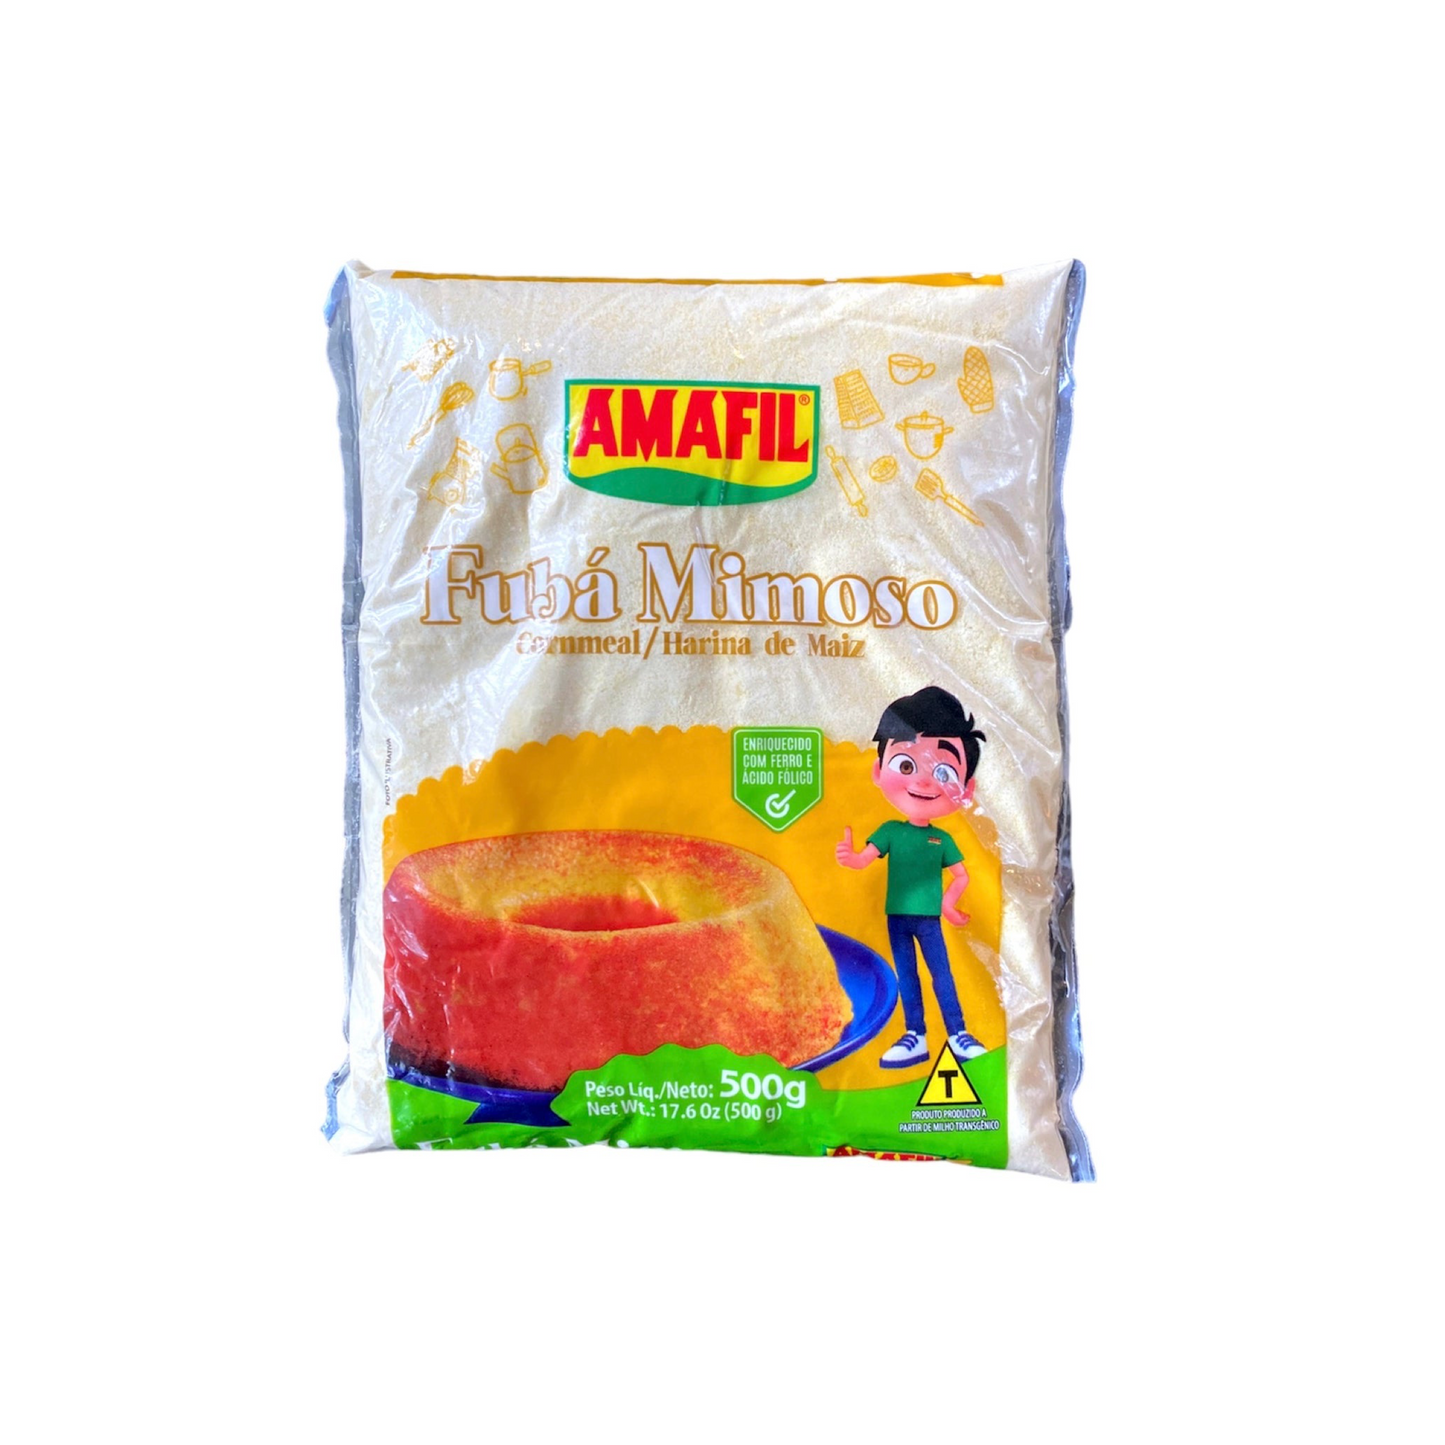 Amafil Corn Meal | Fuba Mimoso Amafil